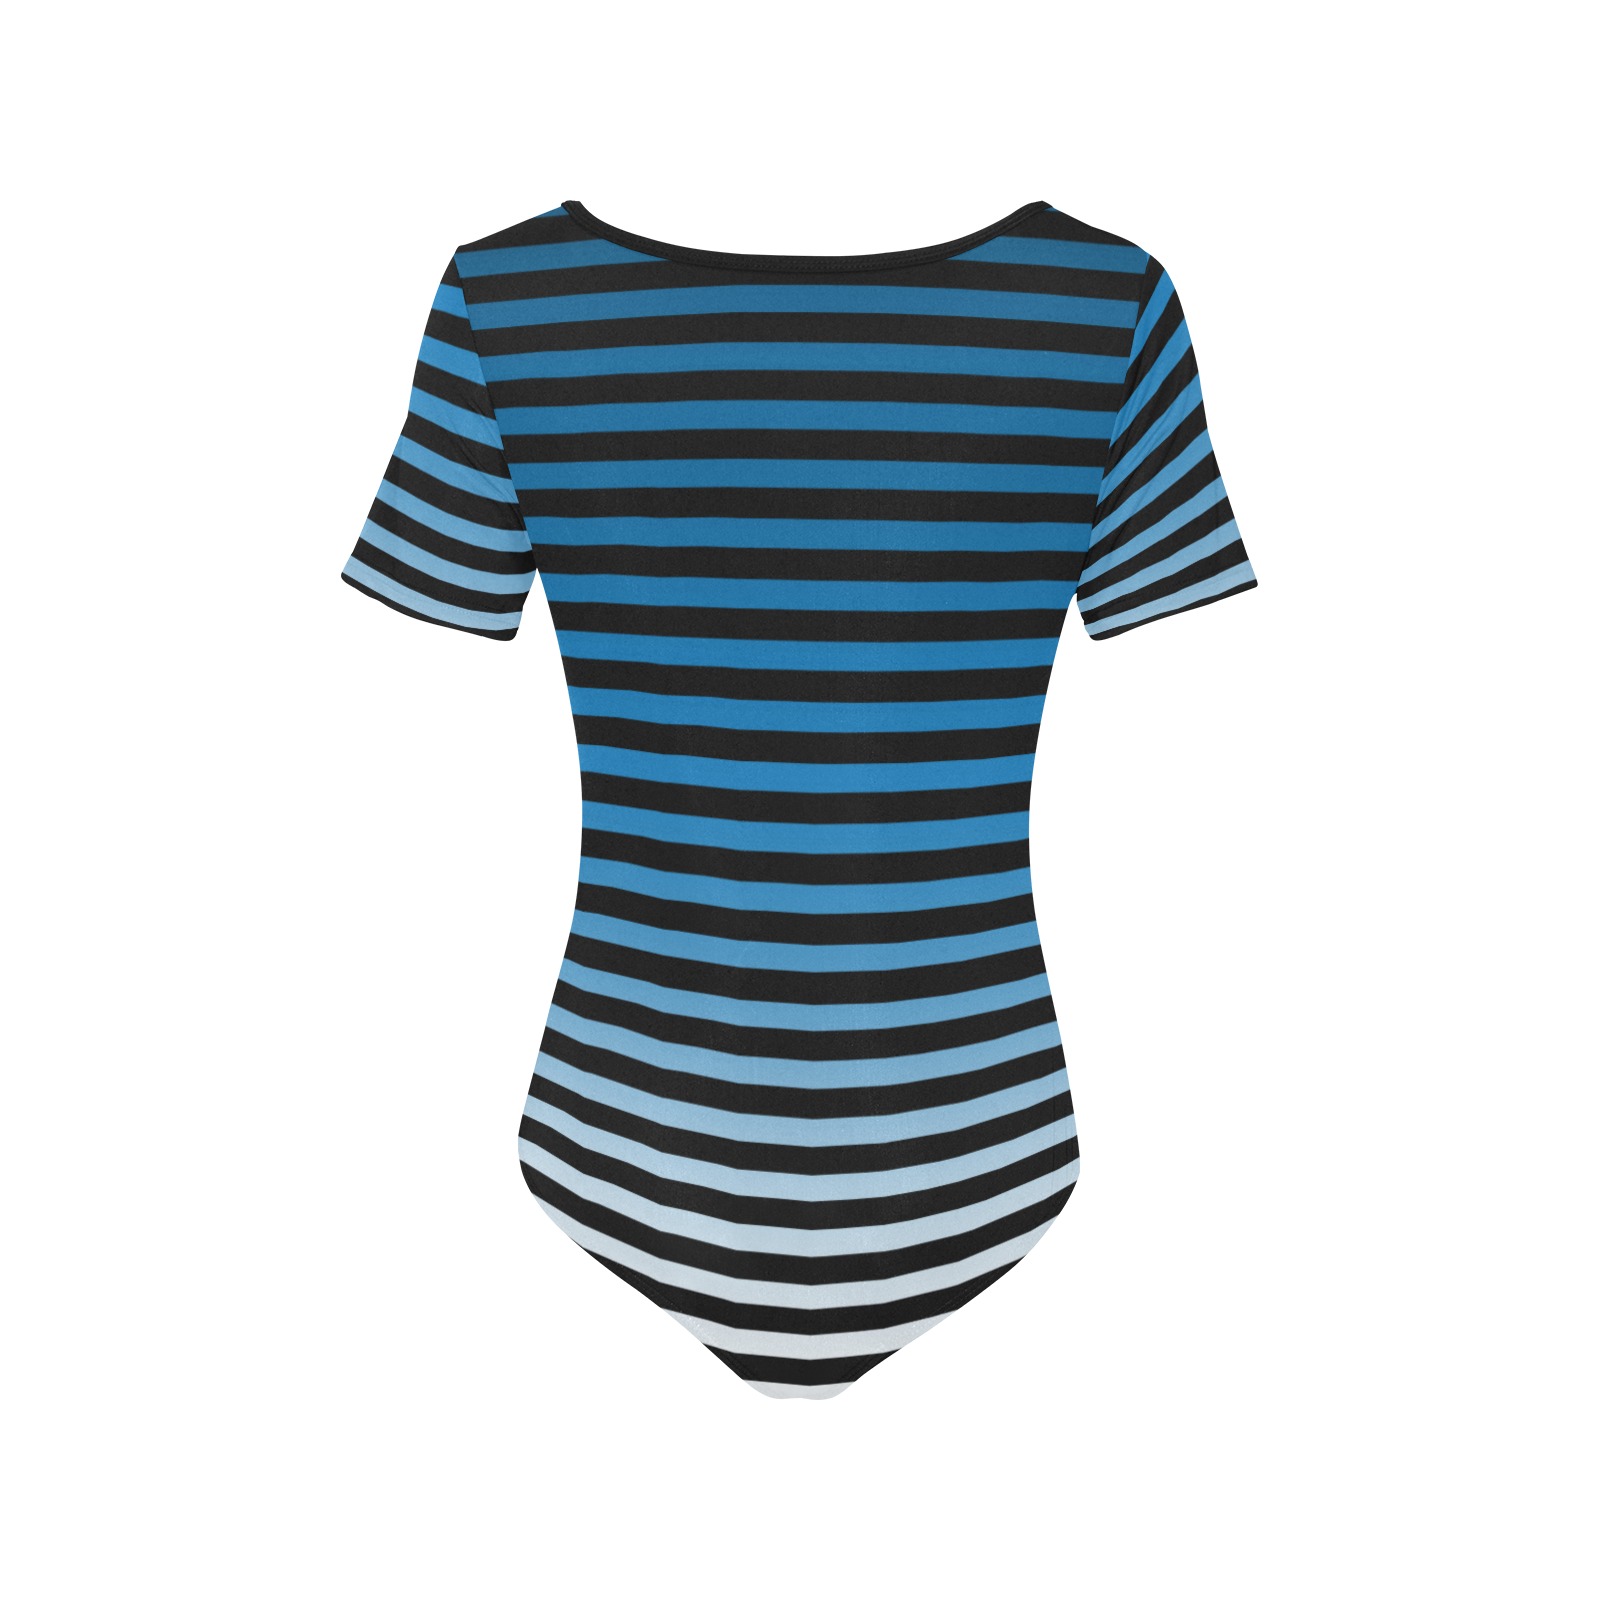 Stripes Fade Blue, Black Women's Short Sleeve Bodysuit